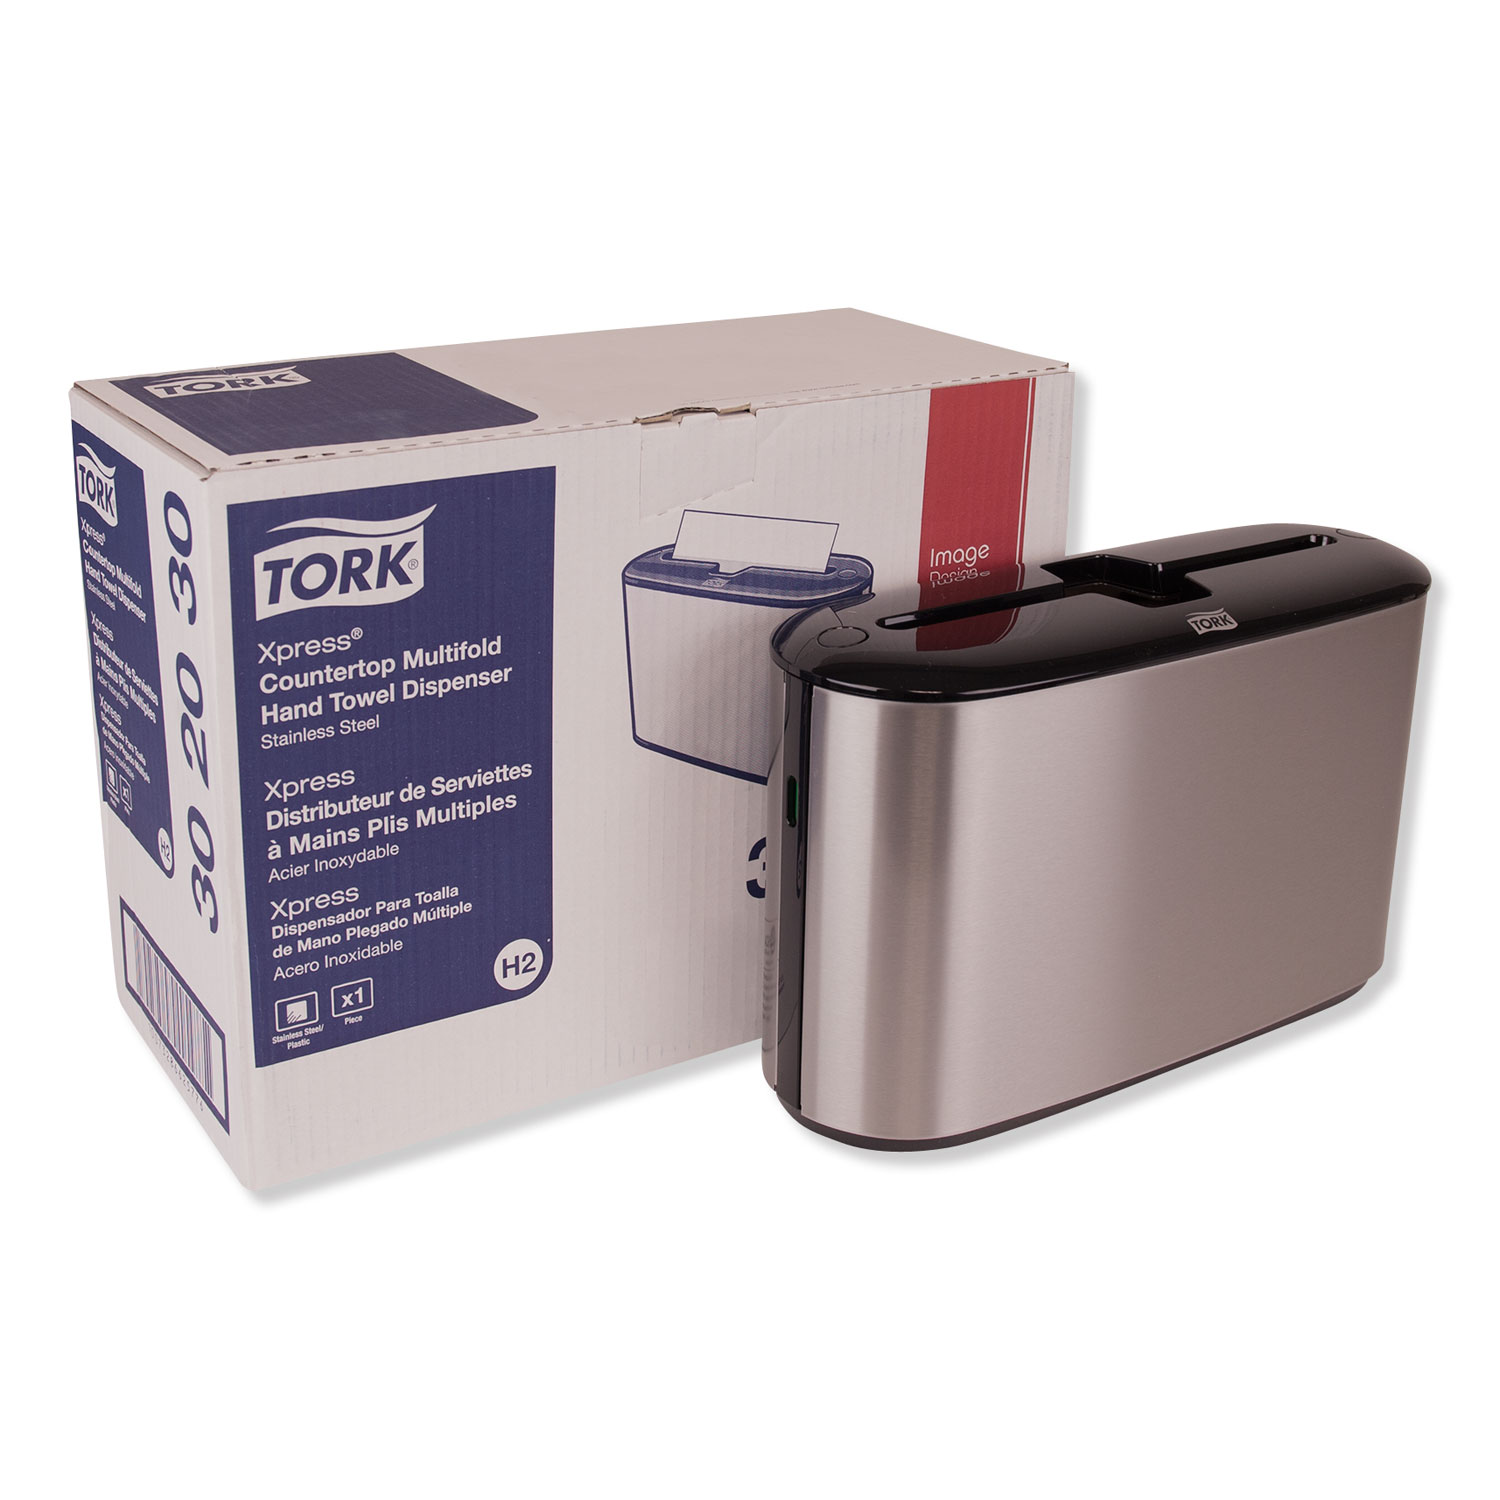  Tork 302030 Xpress Countertop Towel Dispenser, 12.68 x 4.56 x 7.92, Stainless Steel/Black (TRK302030) 